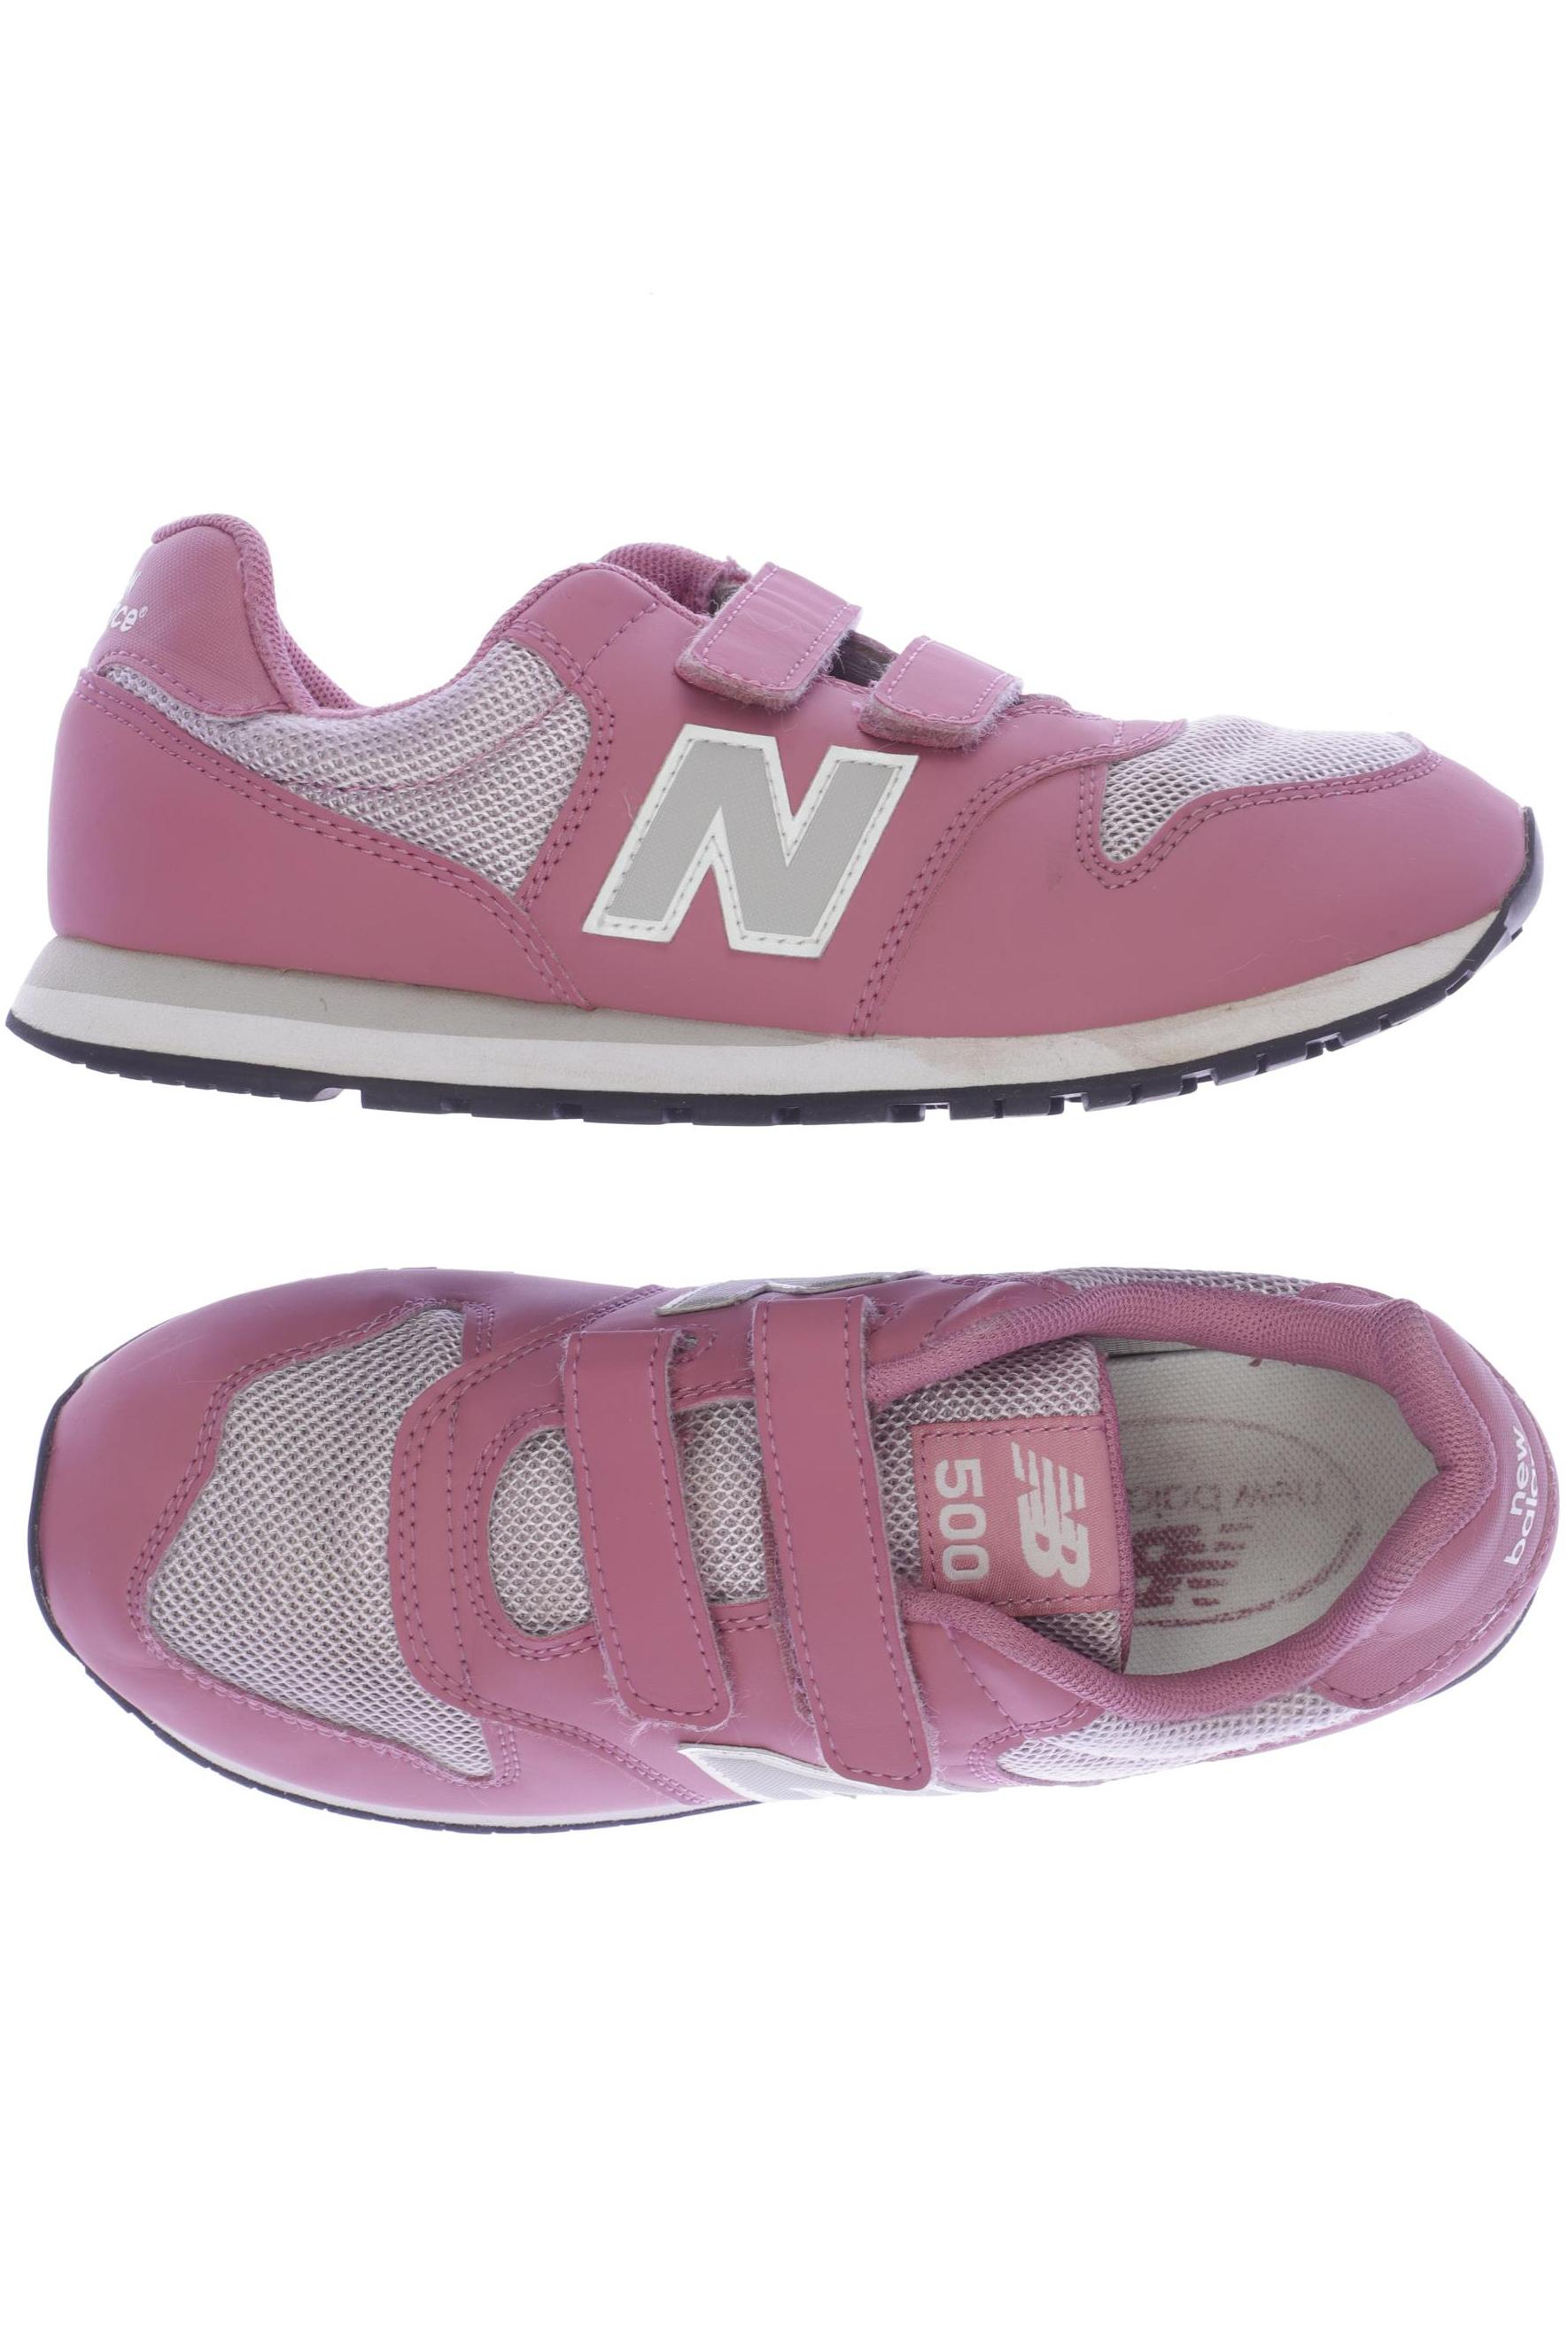 New Balance Damen Sneakers, pink von New Balance